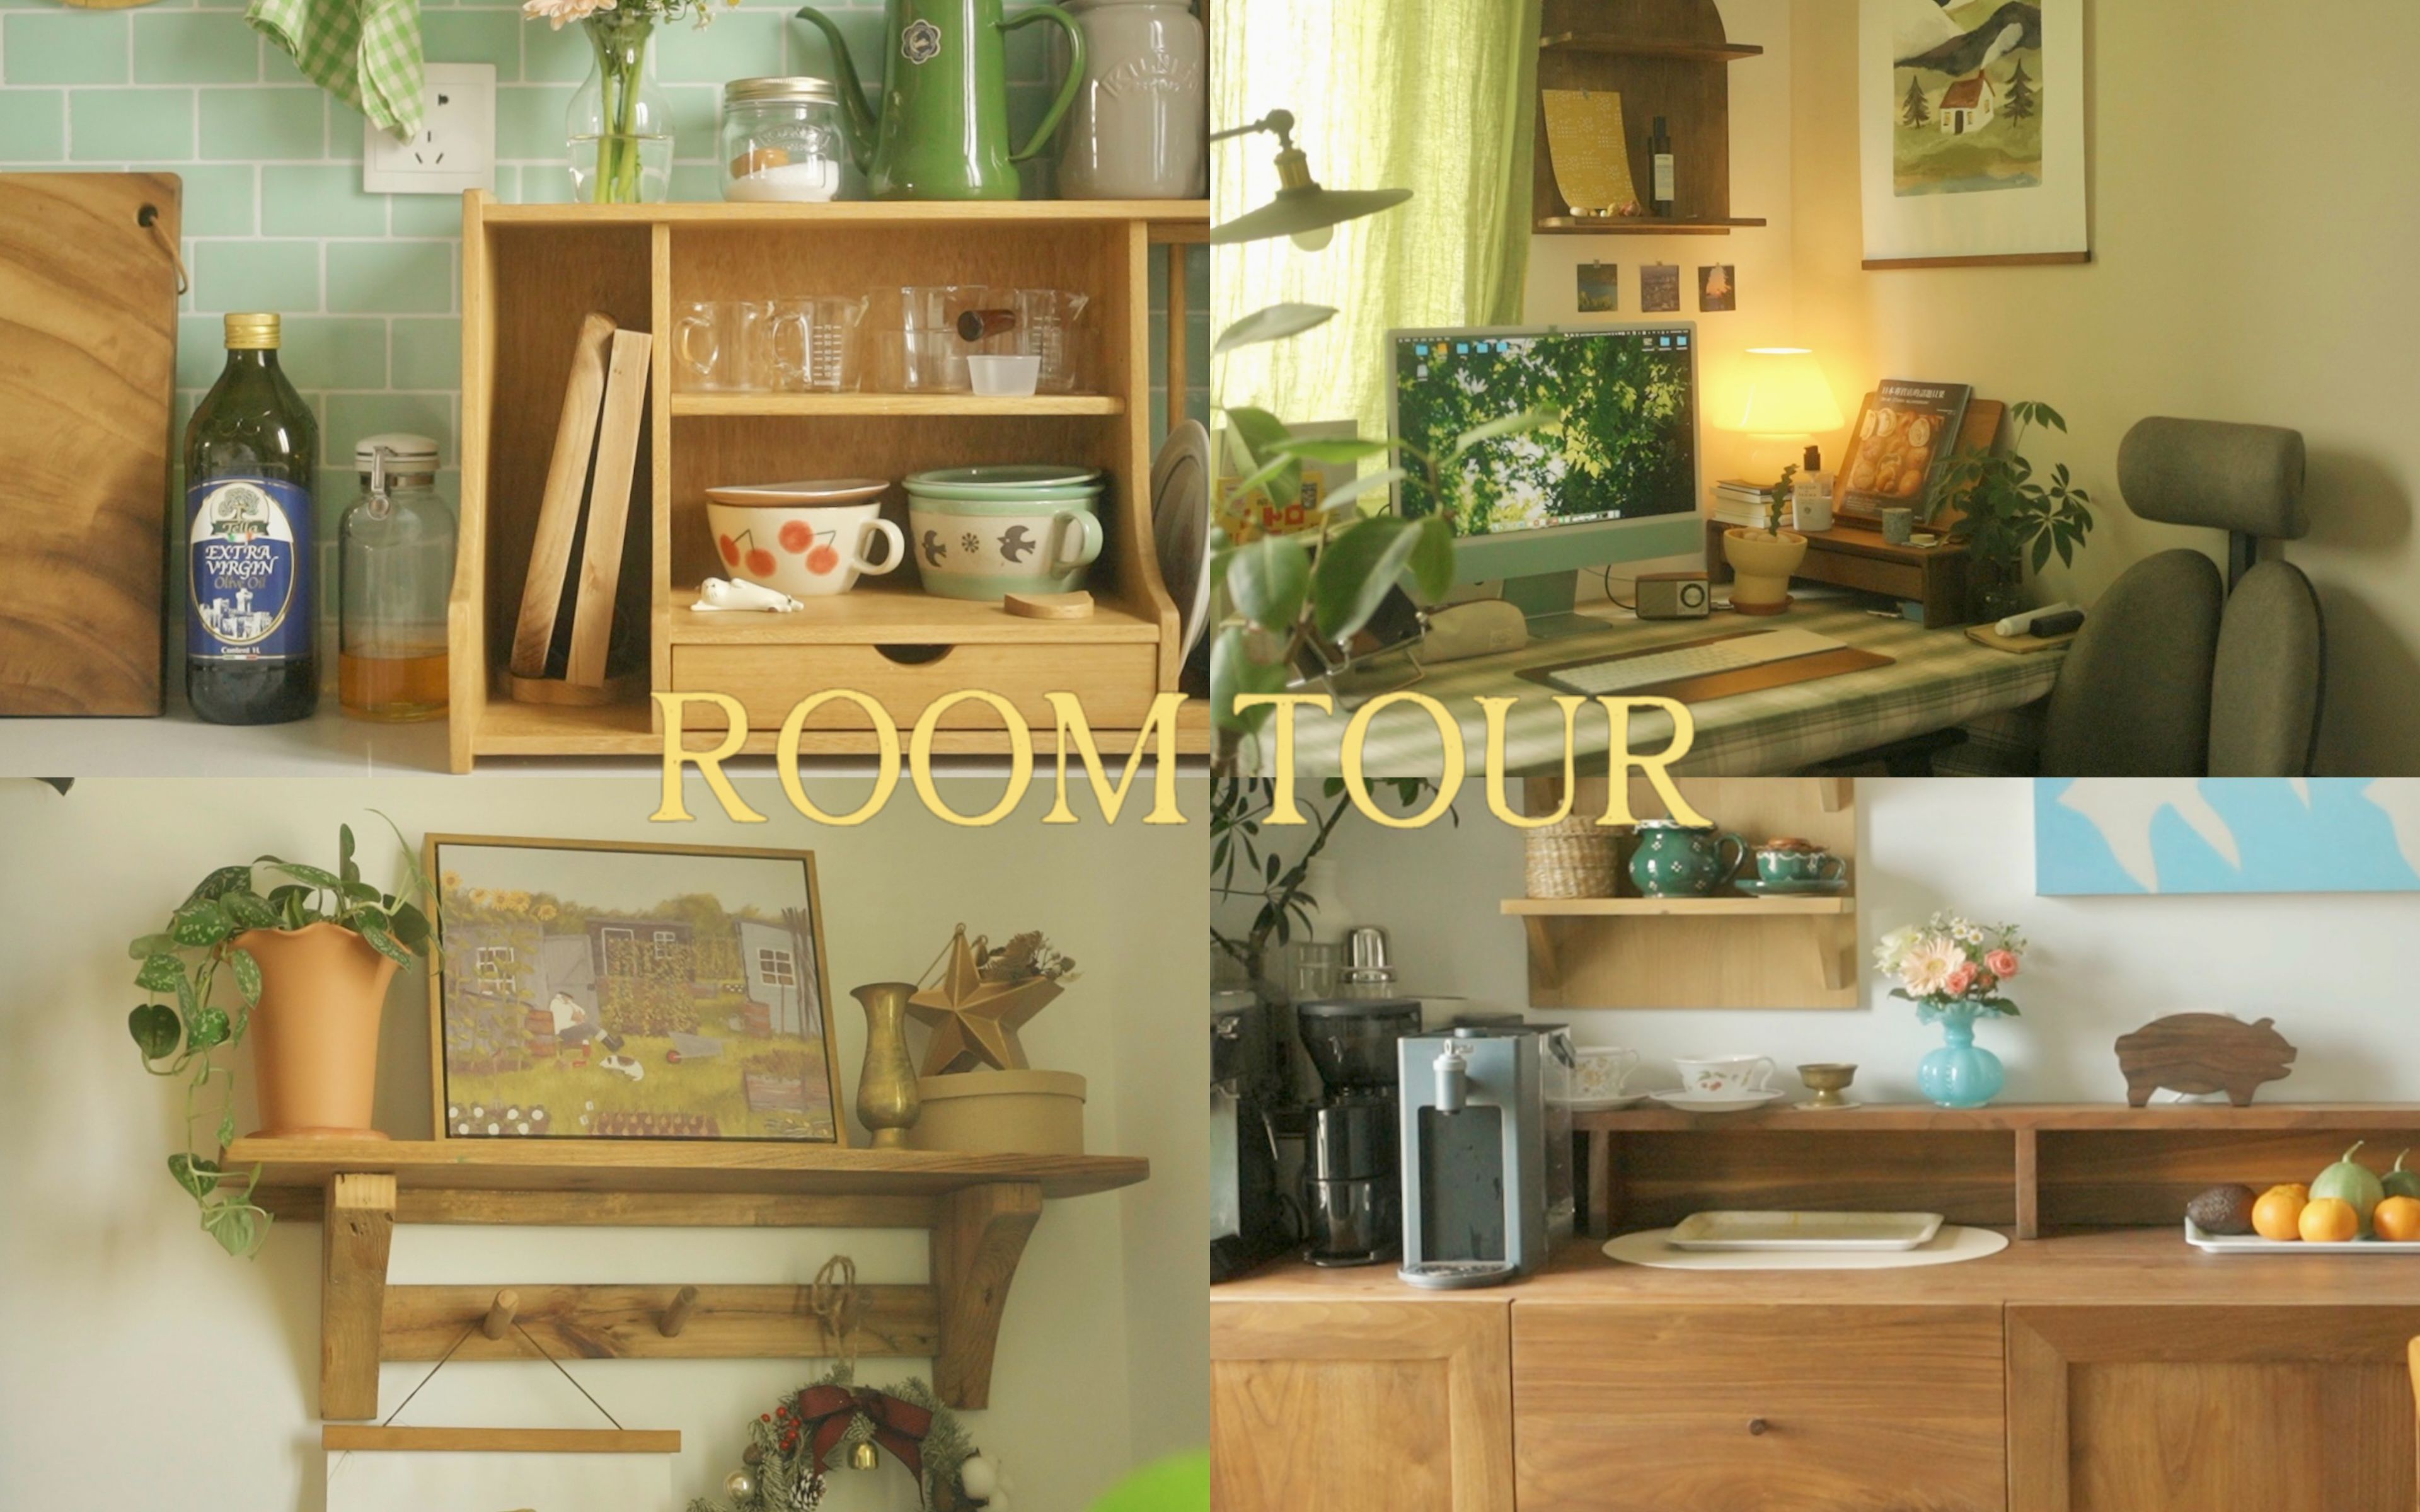 Roomtour · 沉浸参观我的房间 / 家居收纳 / 茶包分享 / 独居经验